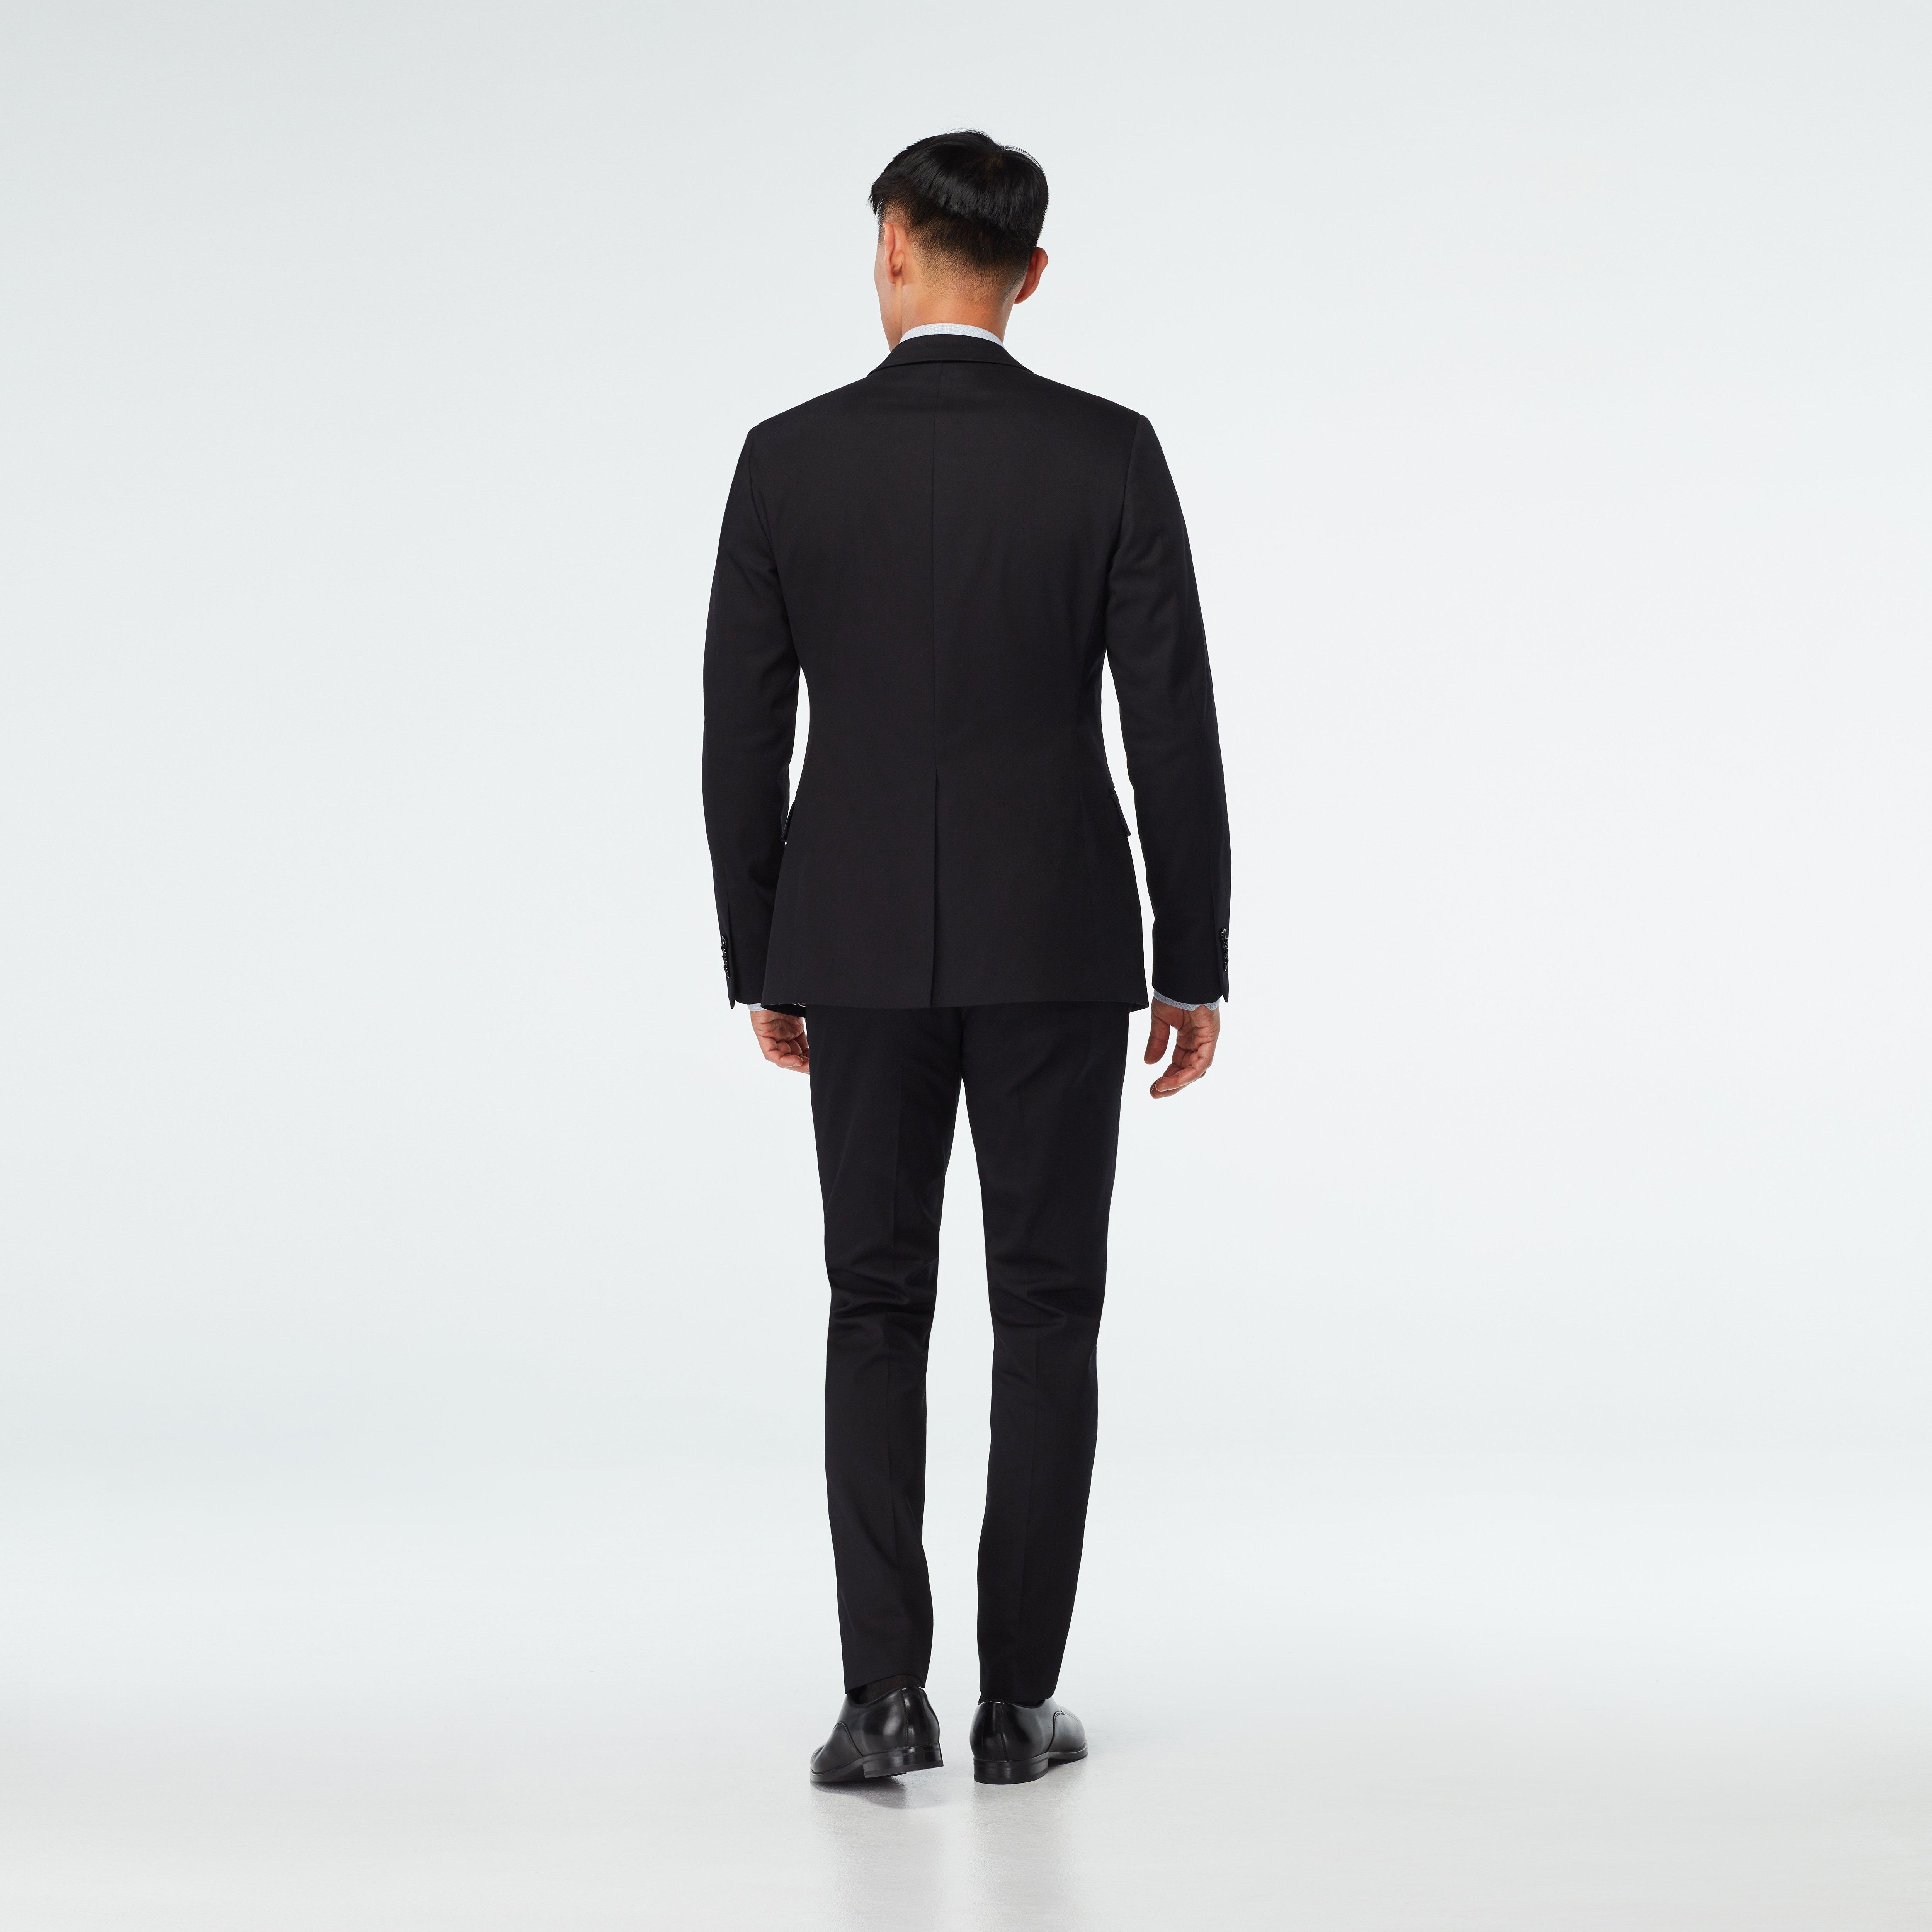 Stamford Black Cotton Stretch Suit